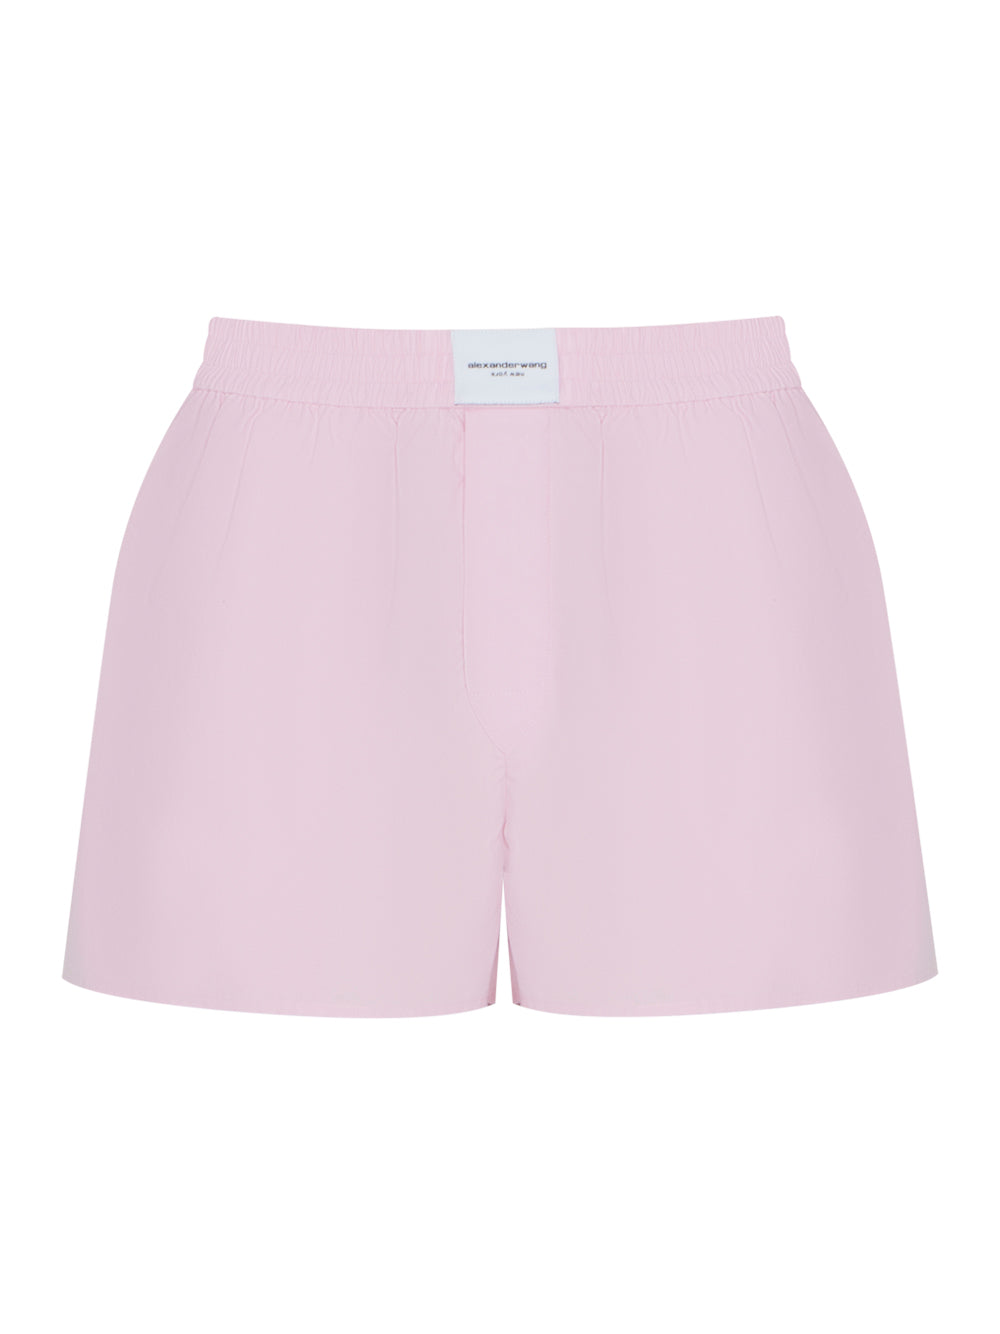 Classic Boxer Shorts (Light Pink)